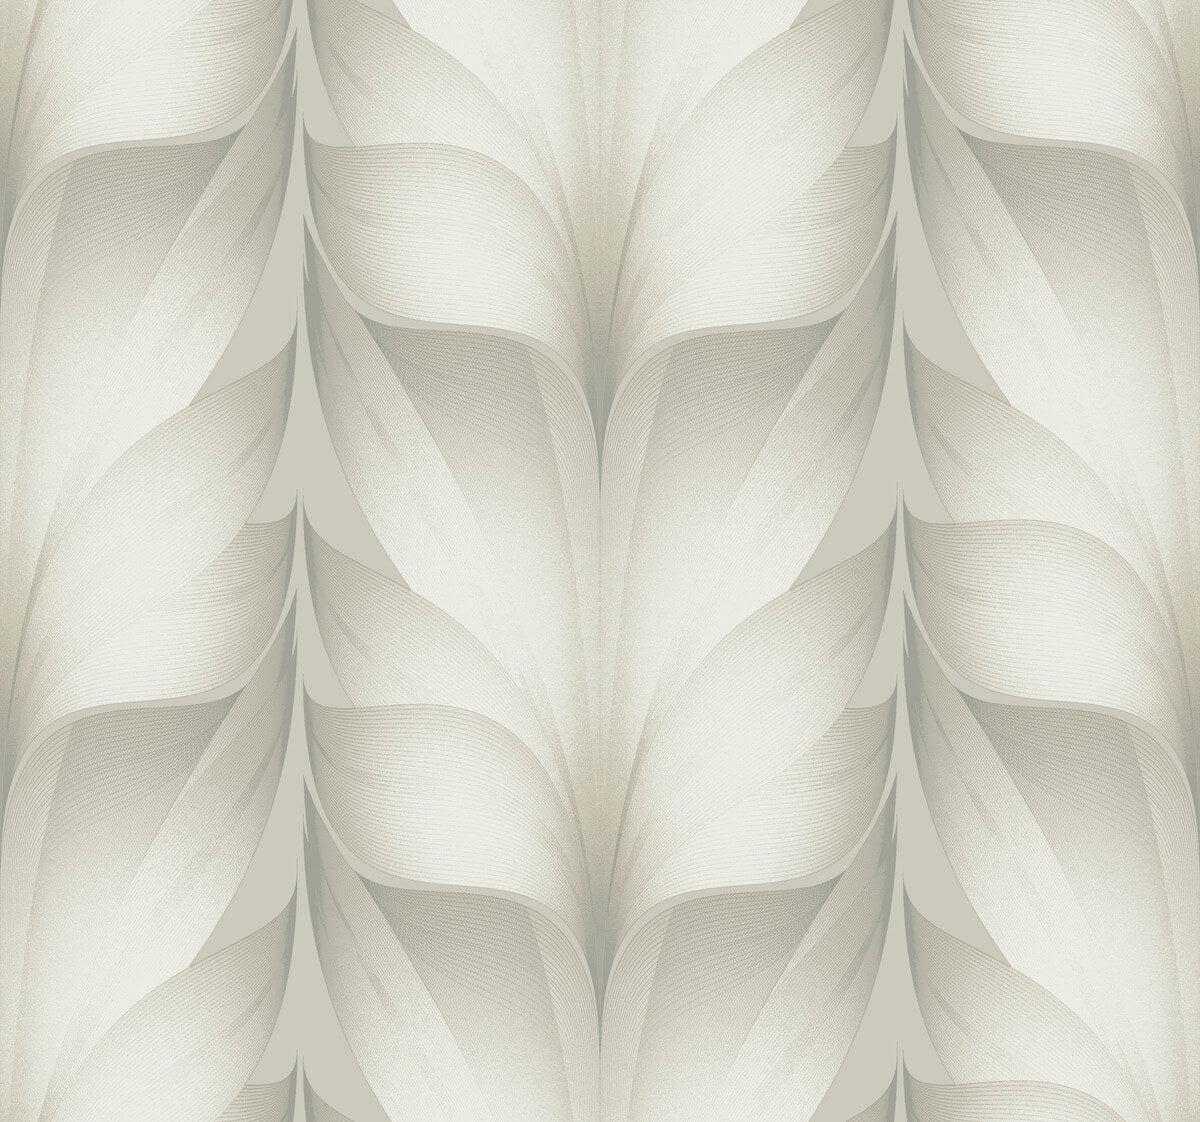 Candice Olson Casual Elegance Lotus Light Stripe Wallpaper - White